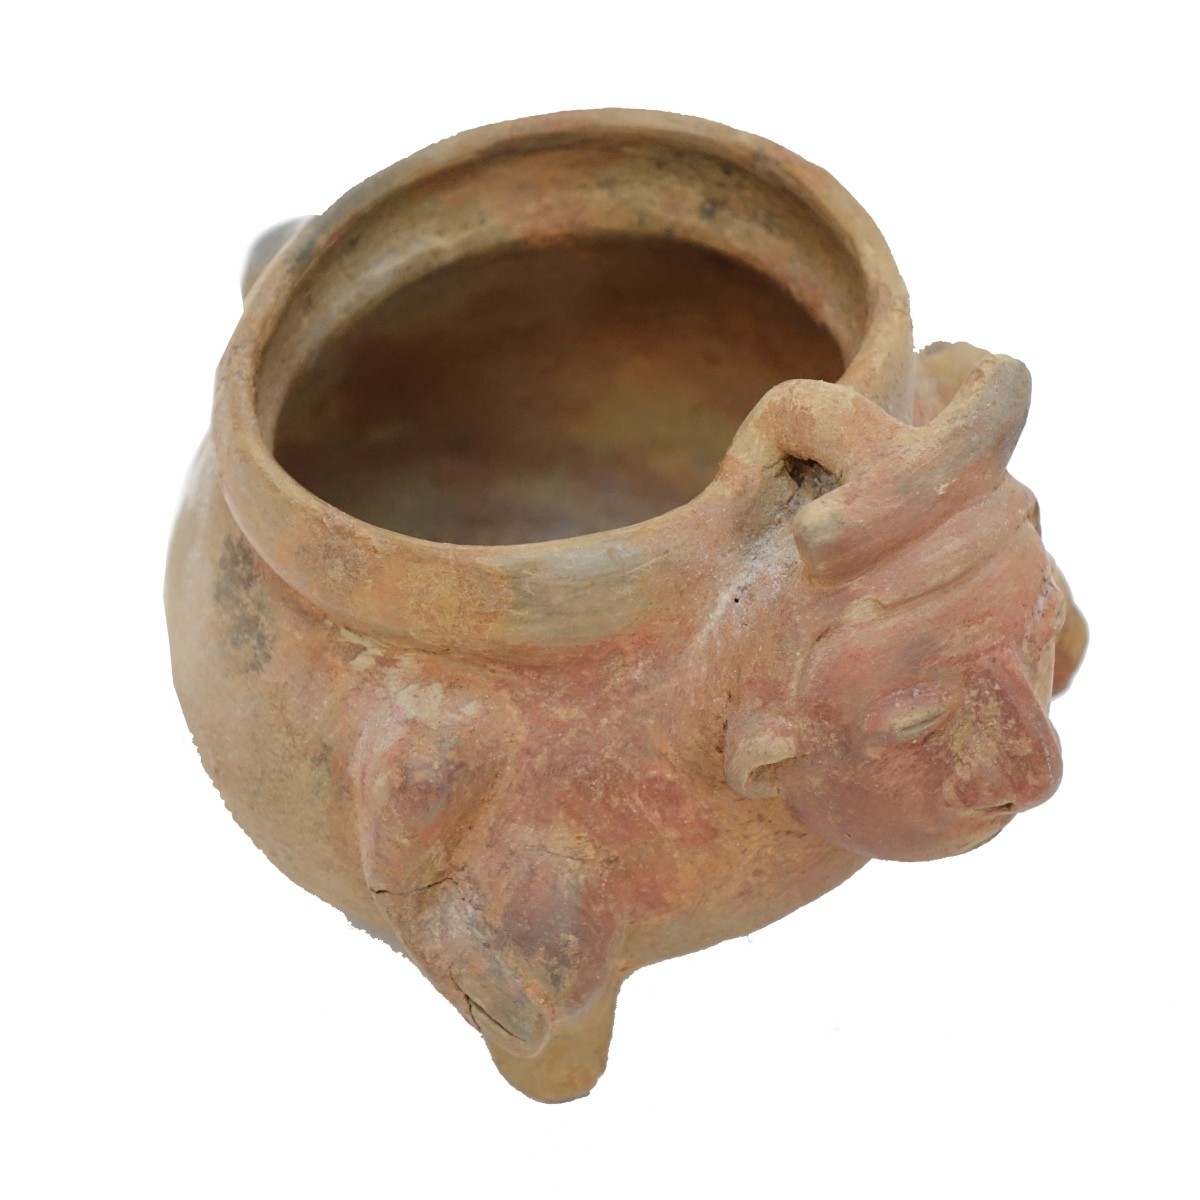 Pre Columbian or Later Ceramic Vessel